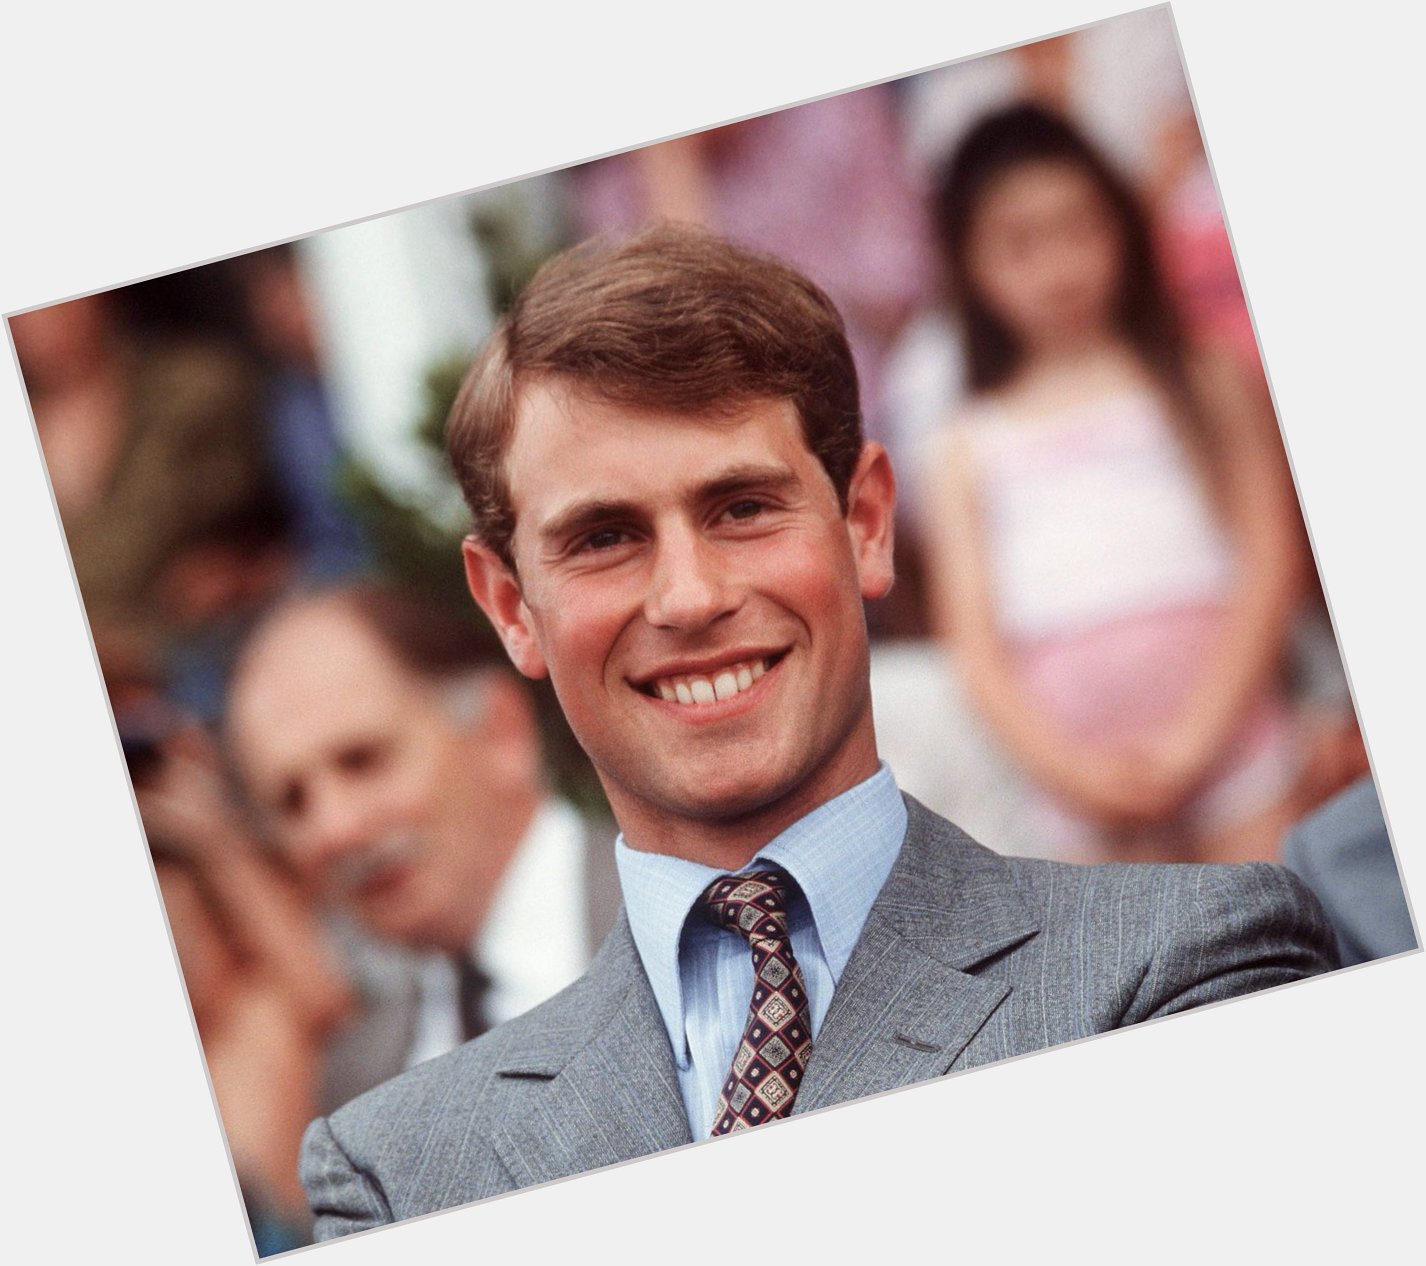   I second that. Happy birthday to Prince Edward, the rightful Duke of Edinburgh! 